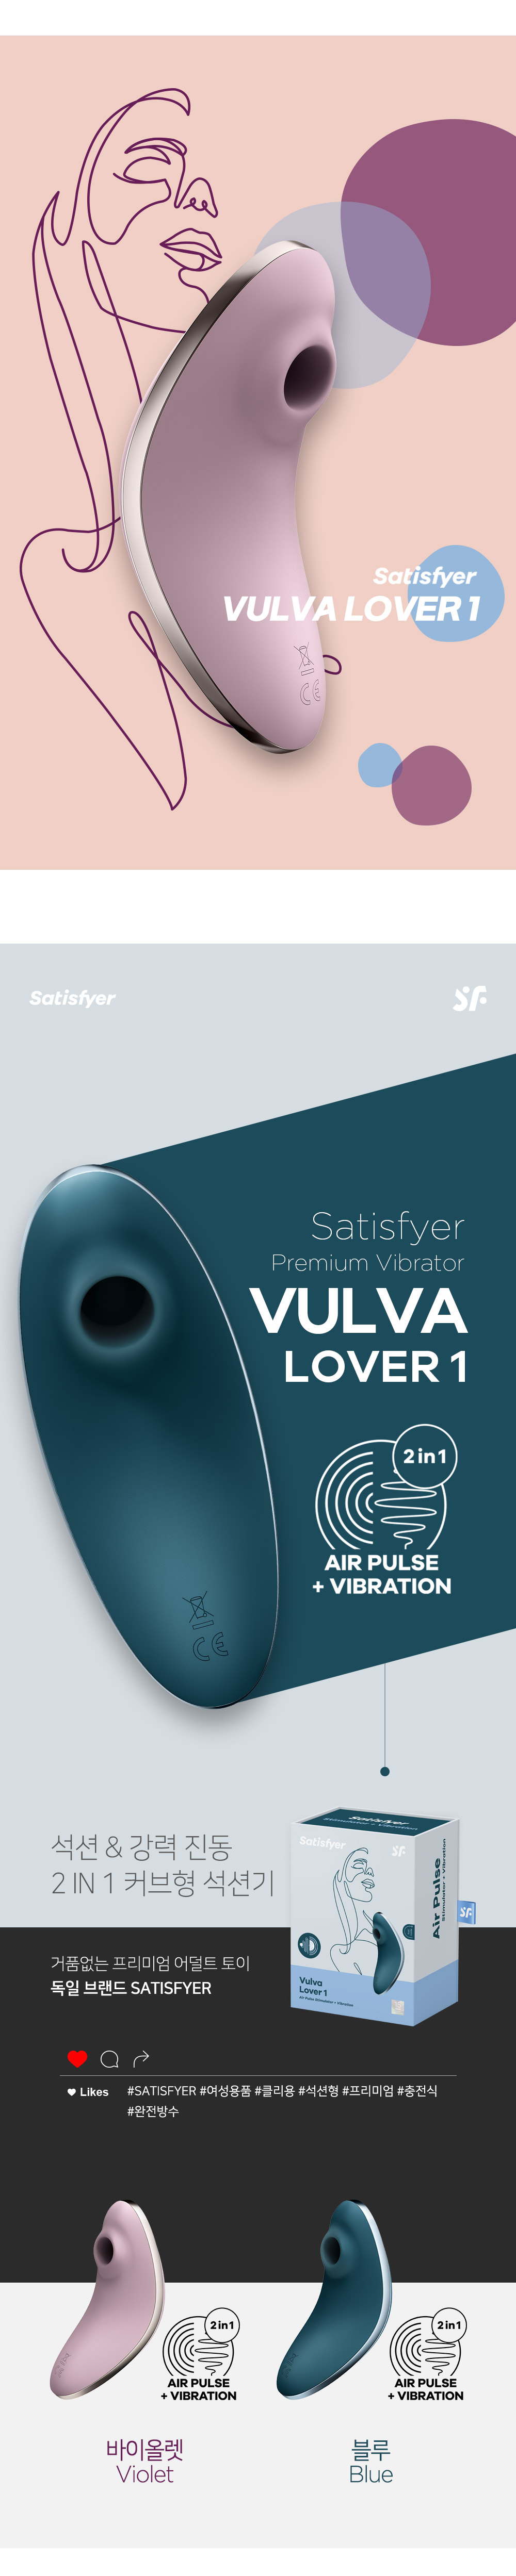 SATISFYER VULVA LOVER 1 (2 COLOR)